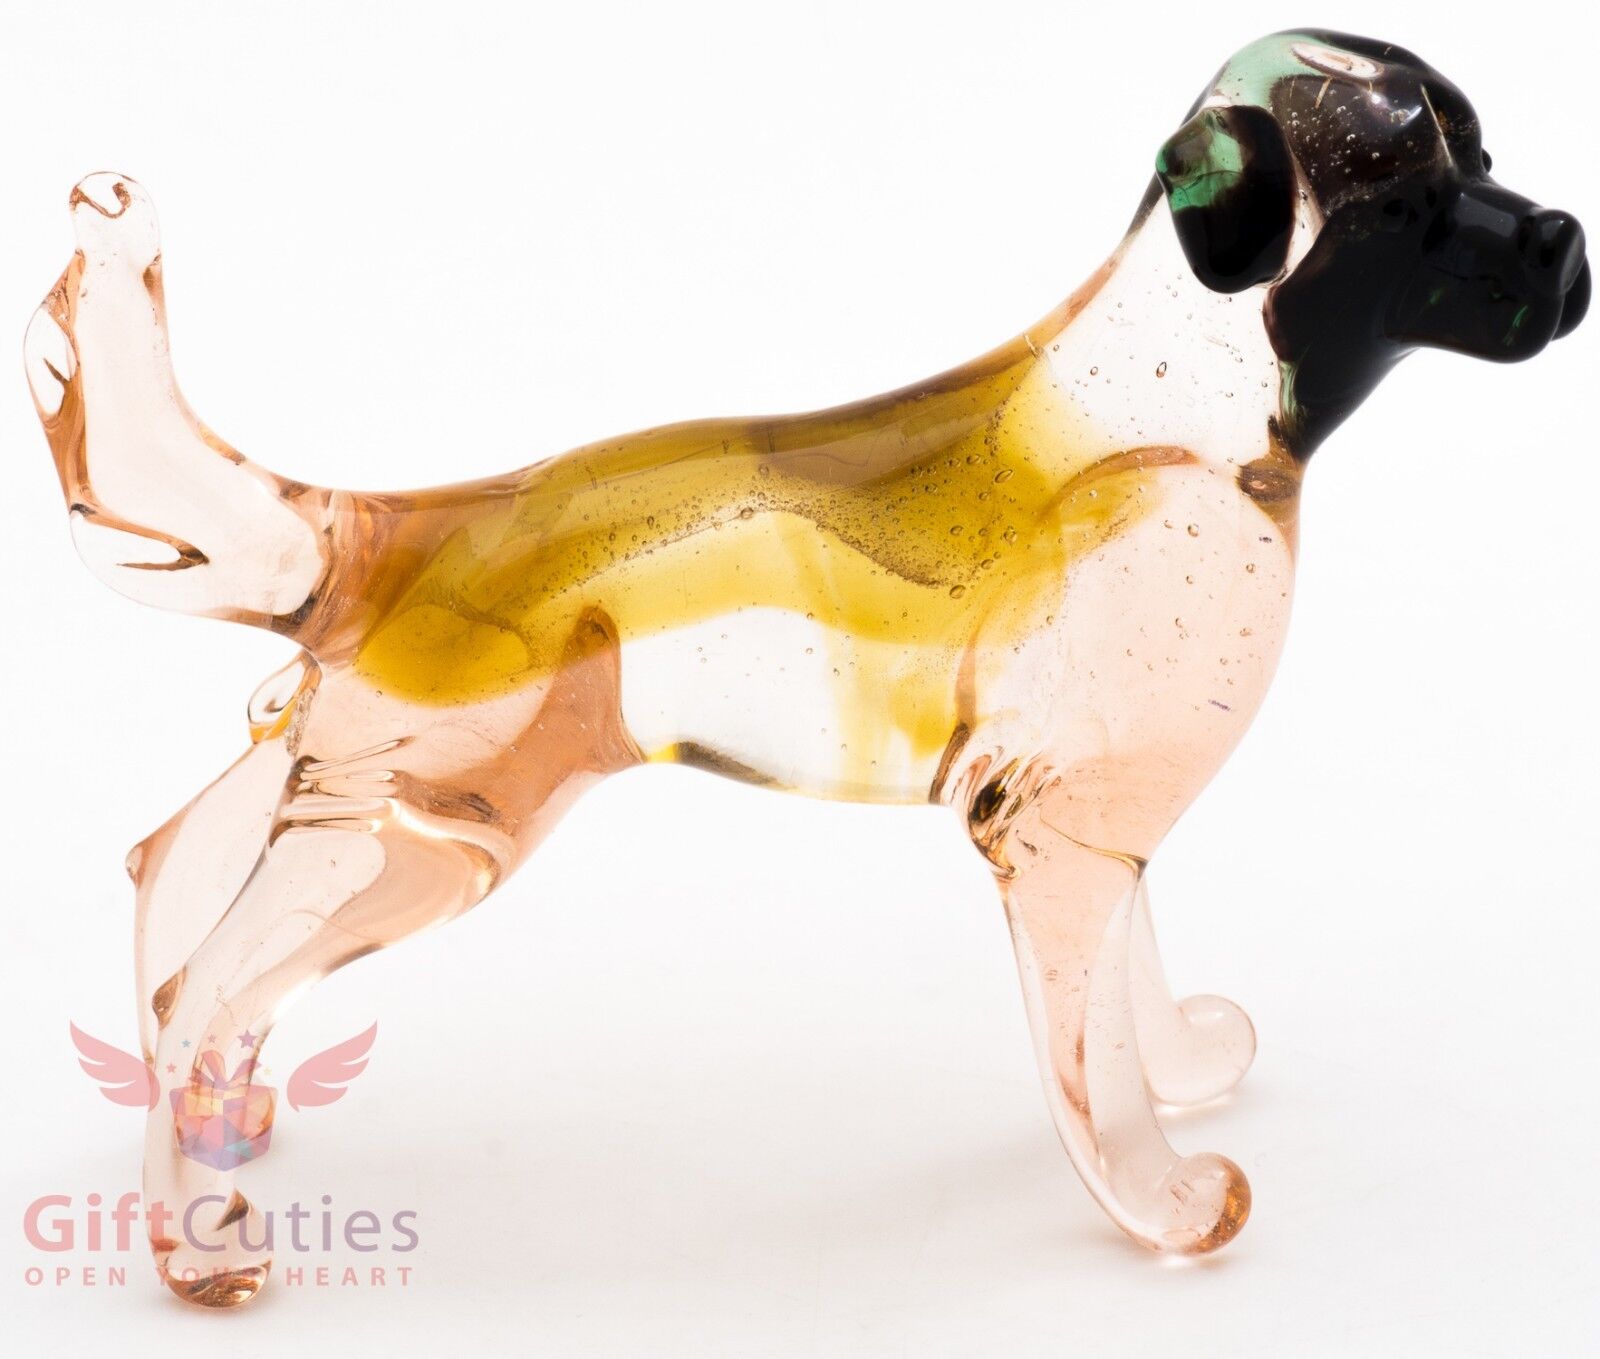 Art Blown Glass Figurine of the Anatolian Shepherd Dog